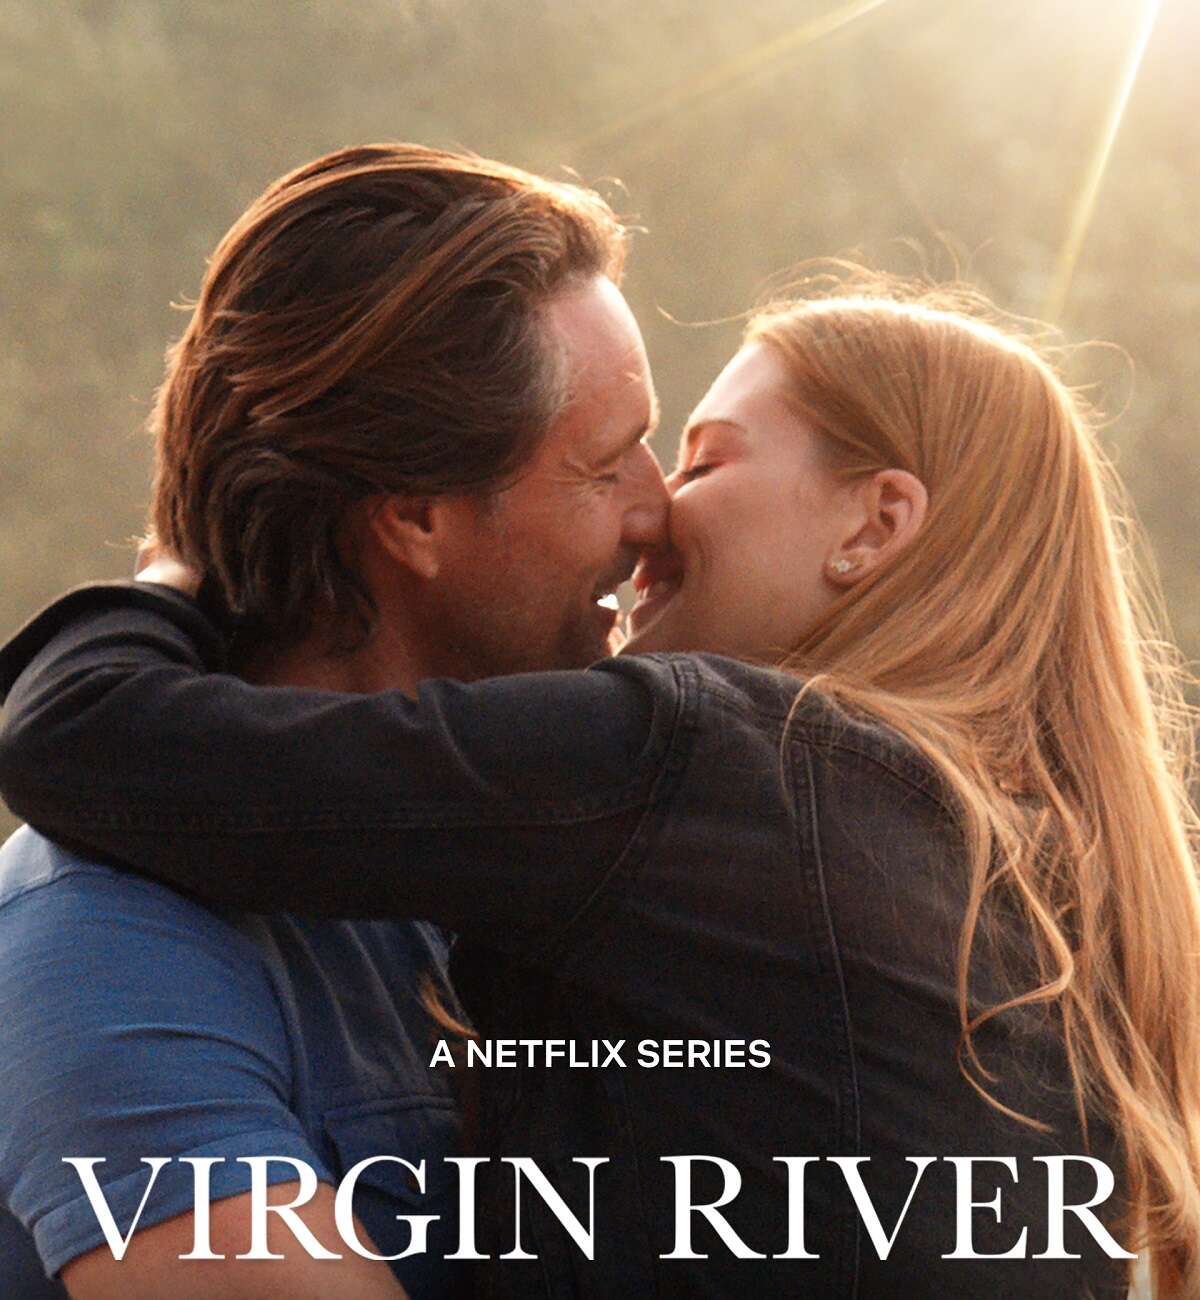 Key art for an early season of 'Virgin River' on Netflix